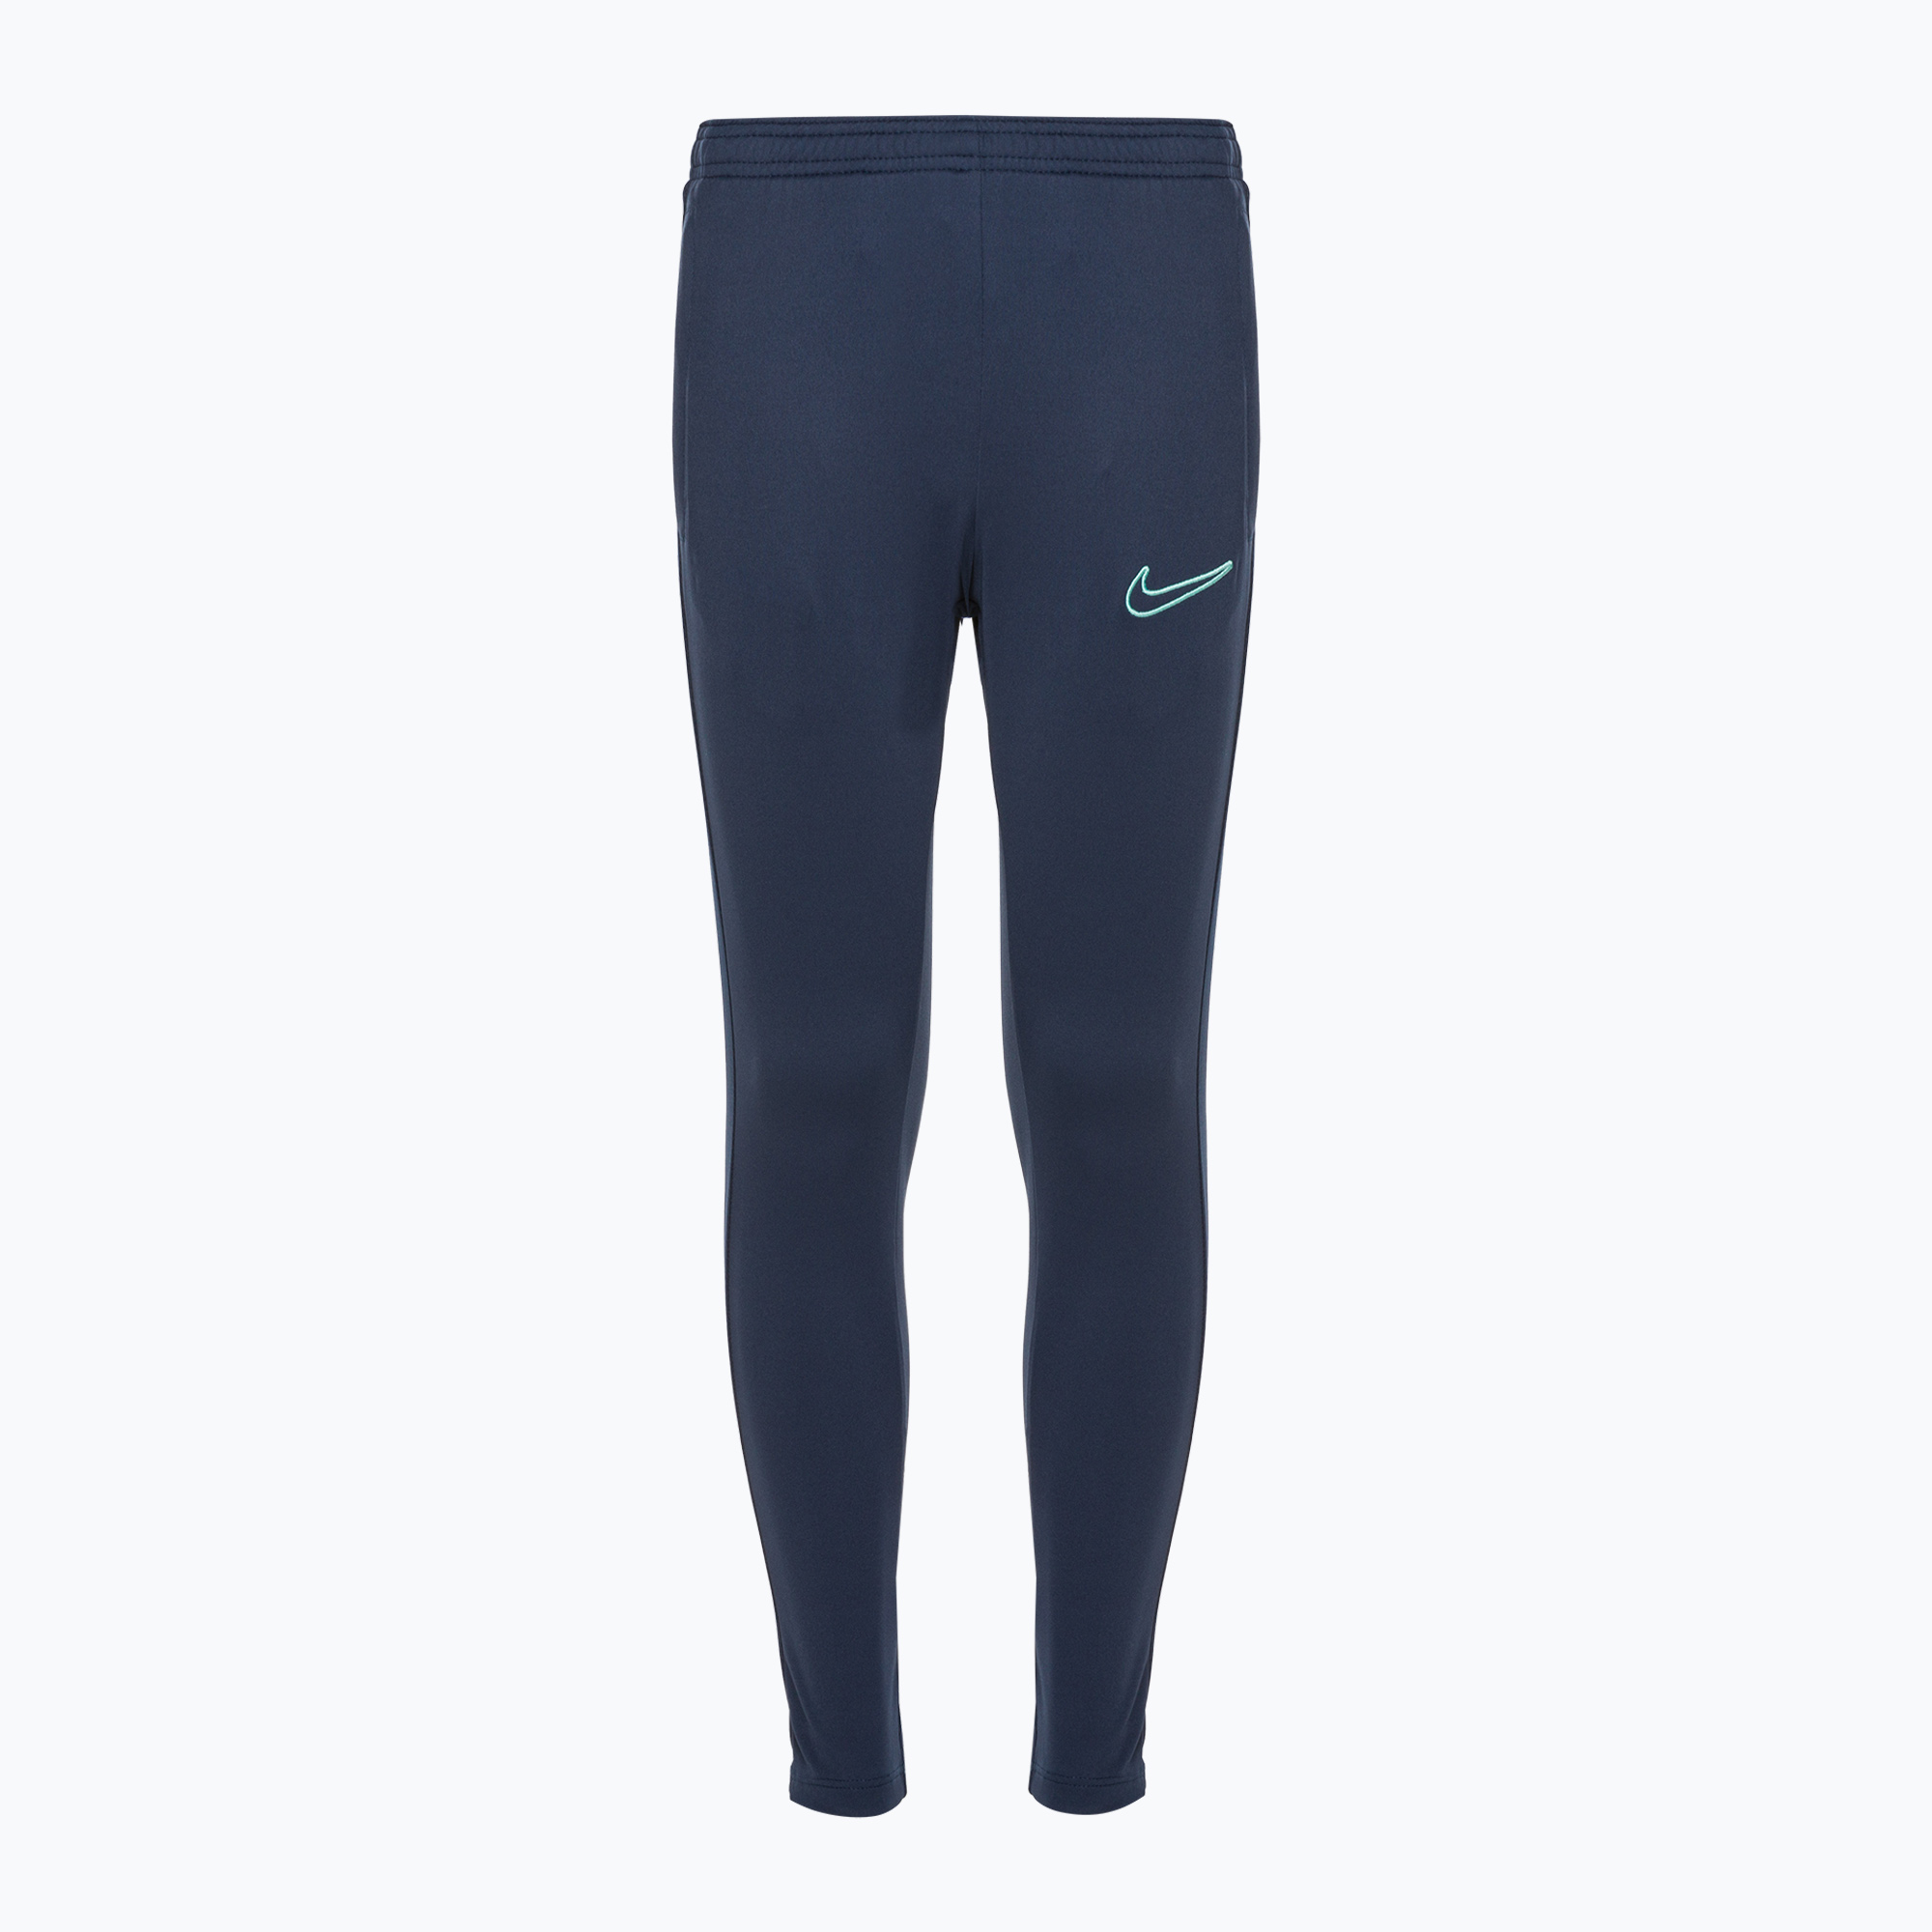 Detské futbalové nohavice Nike Dri-Fit Academy23 midnight navy/midnight navy/hyper turquoise